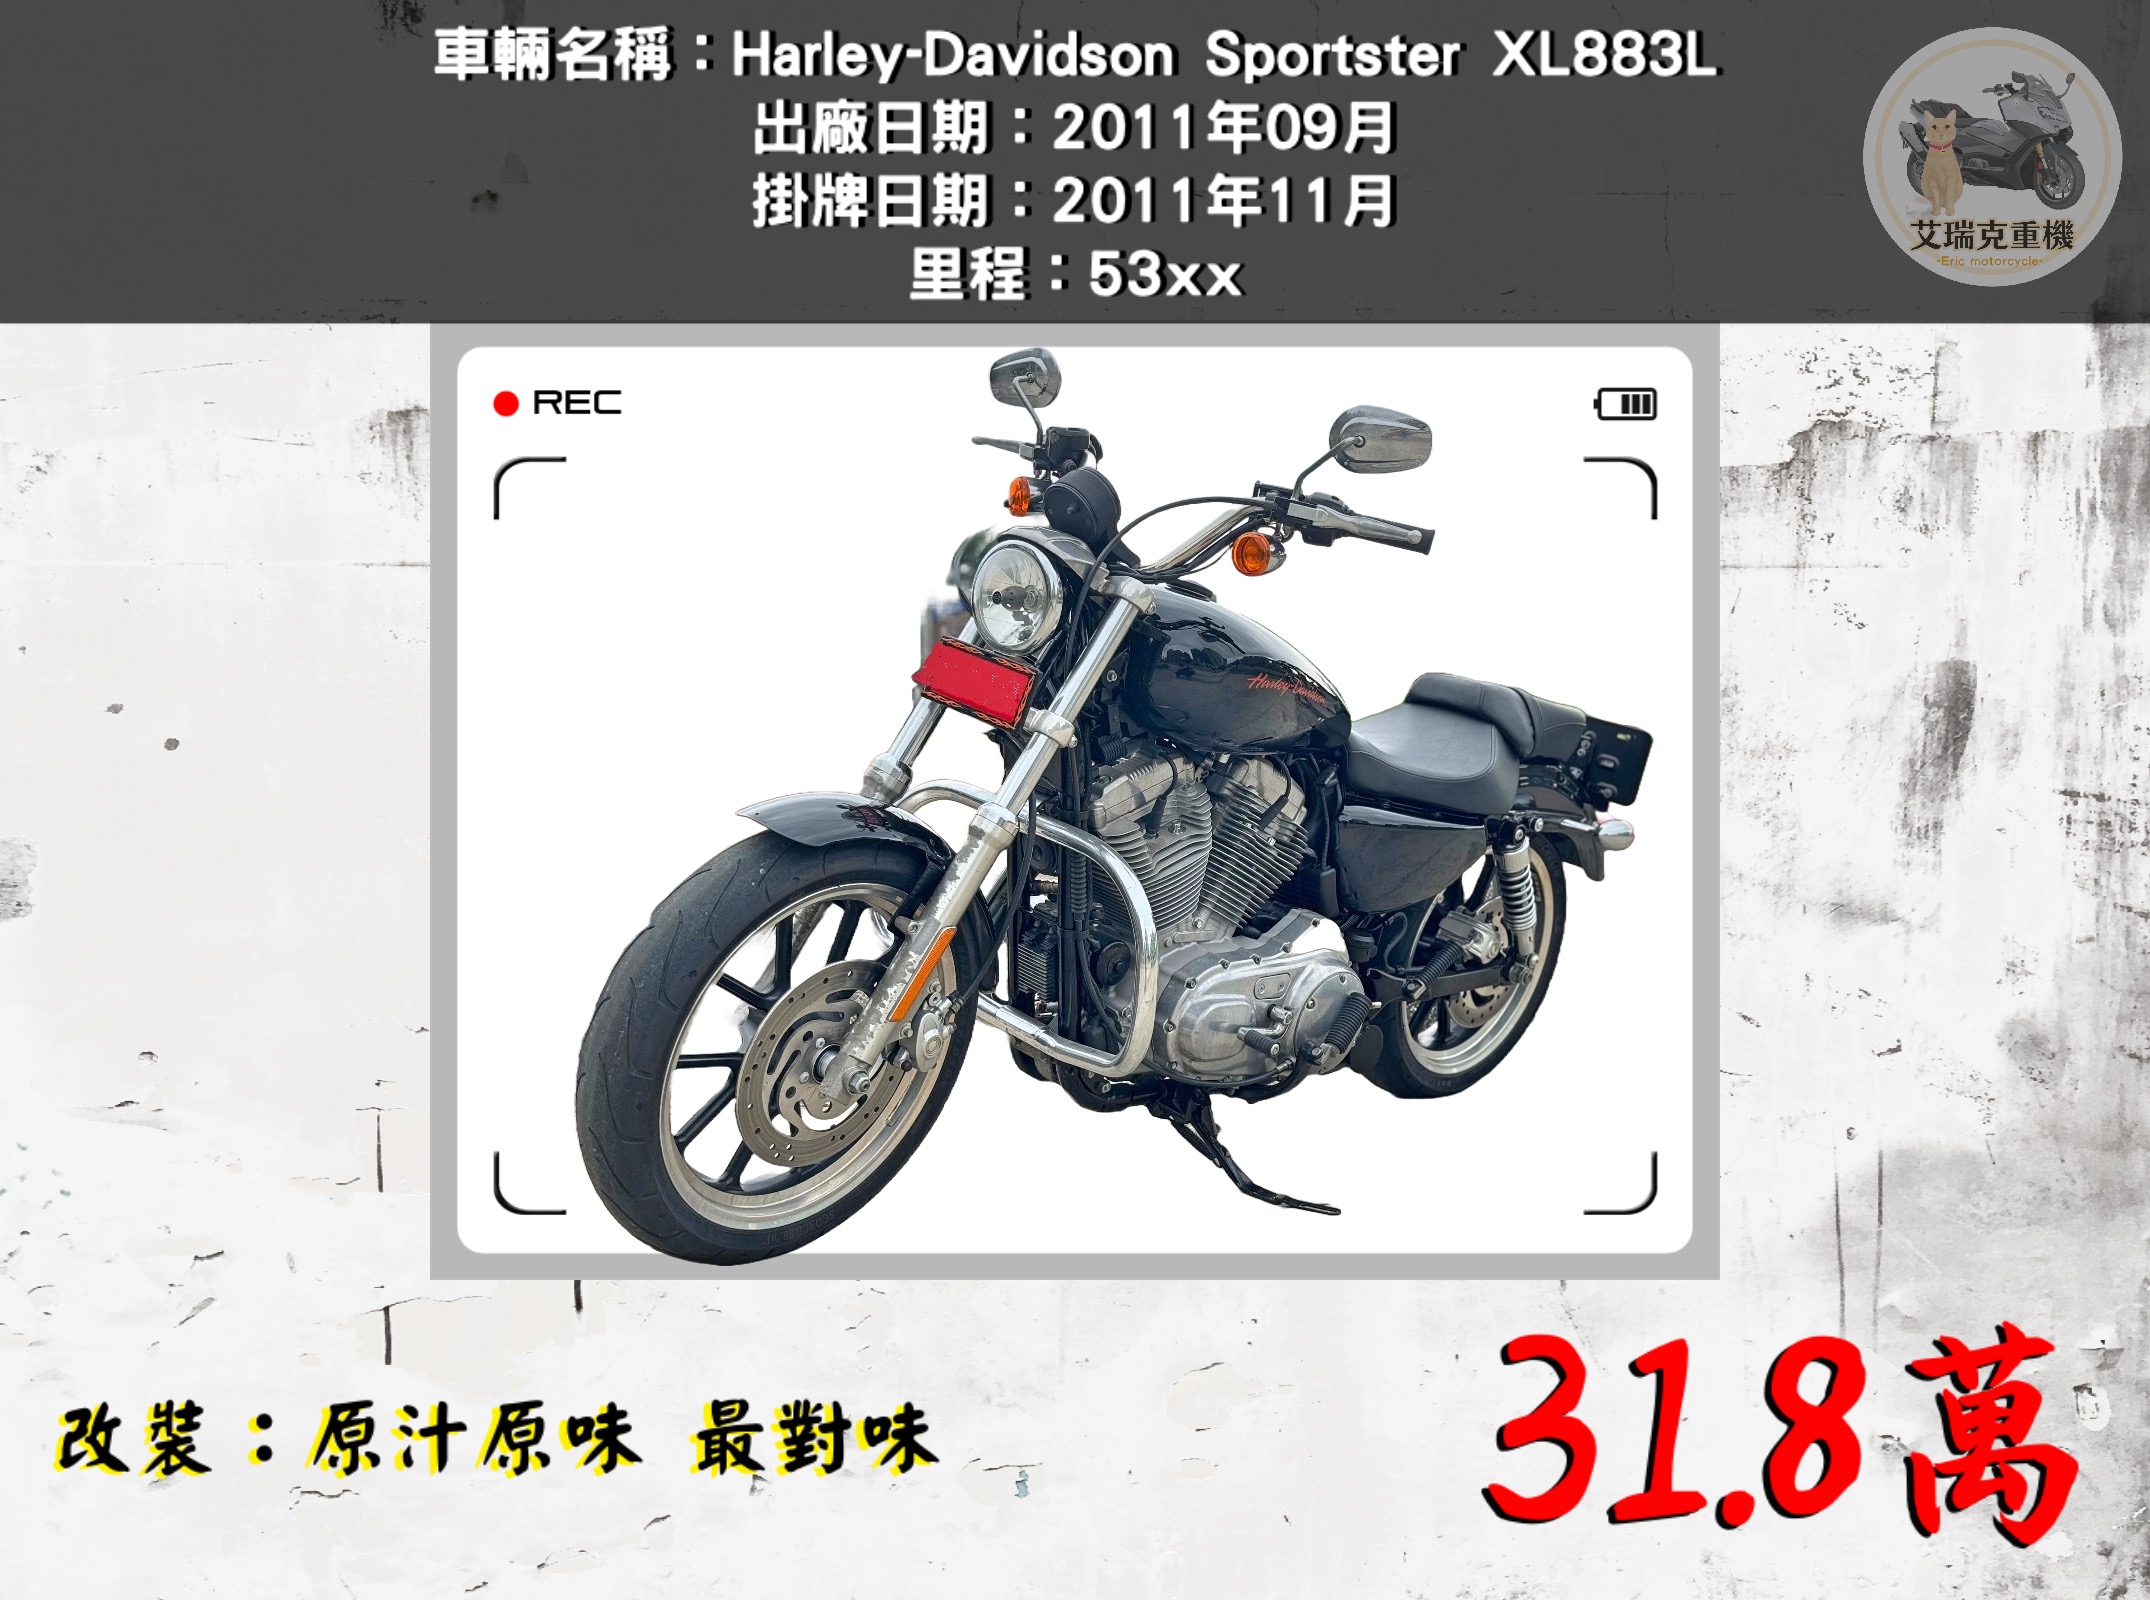 HARLEY-DAVIDSON XL883L - 中古/二手車出售中 Harley-Davidson Sportster XL883L | 艾瑞克重機